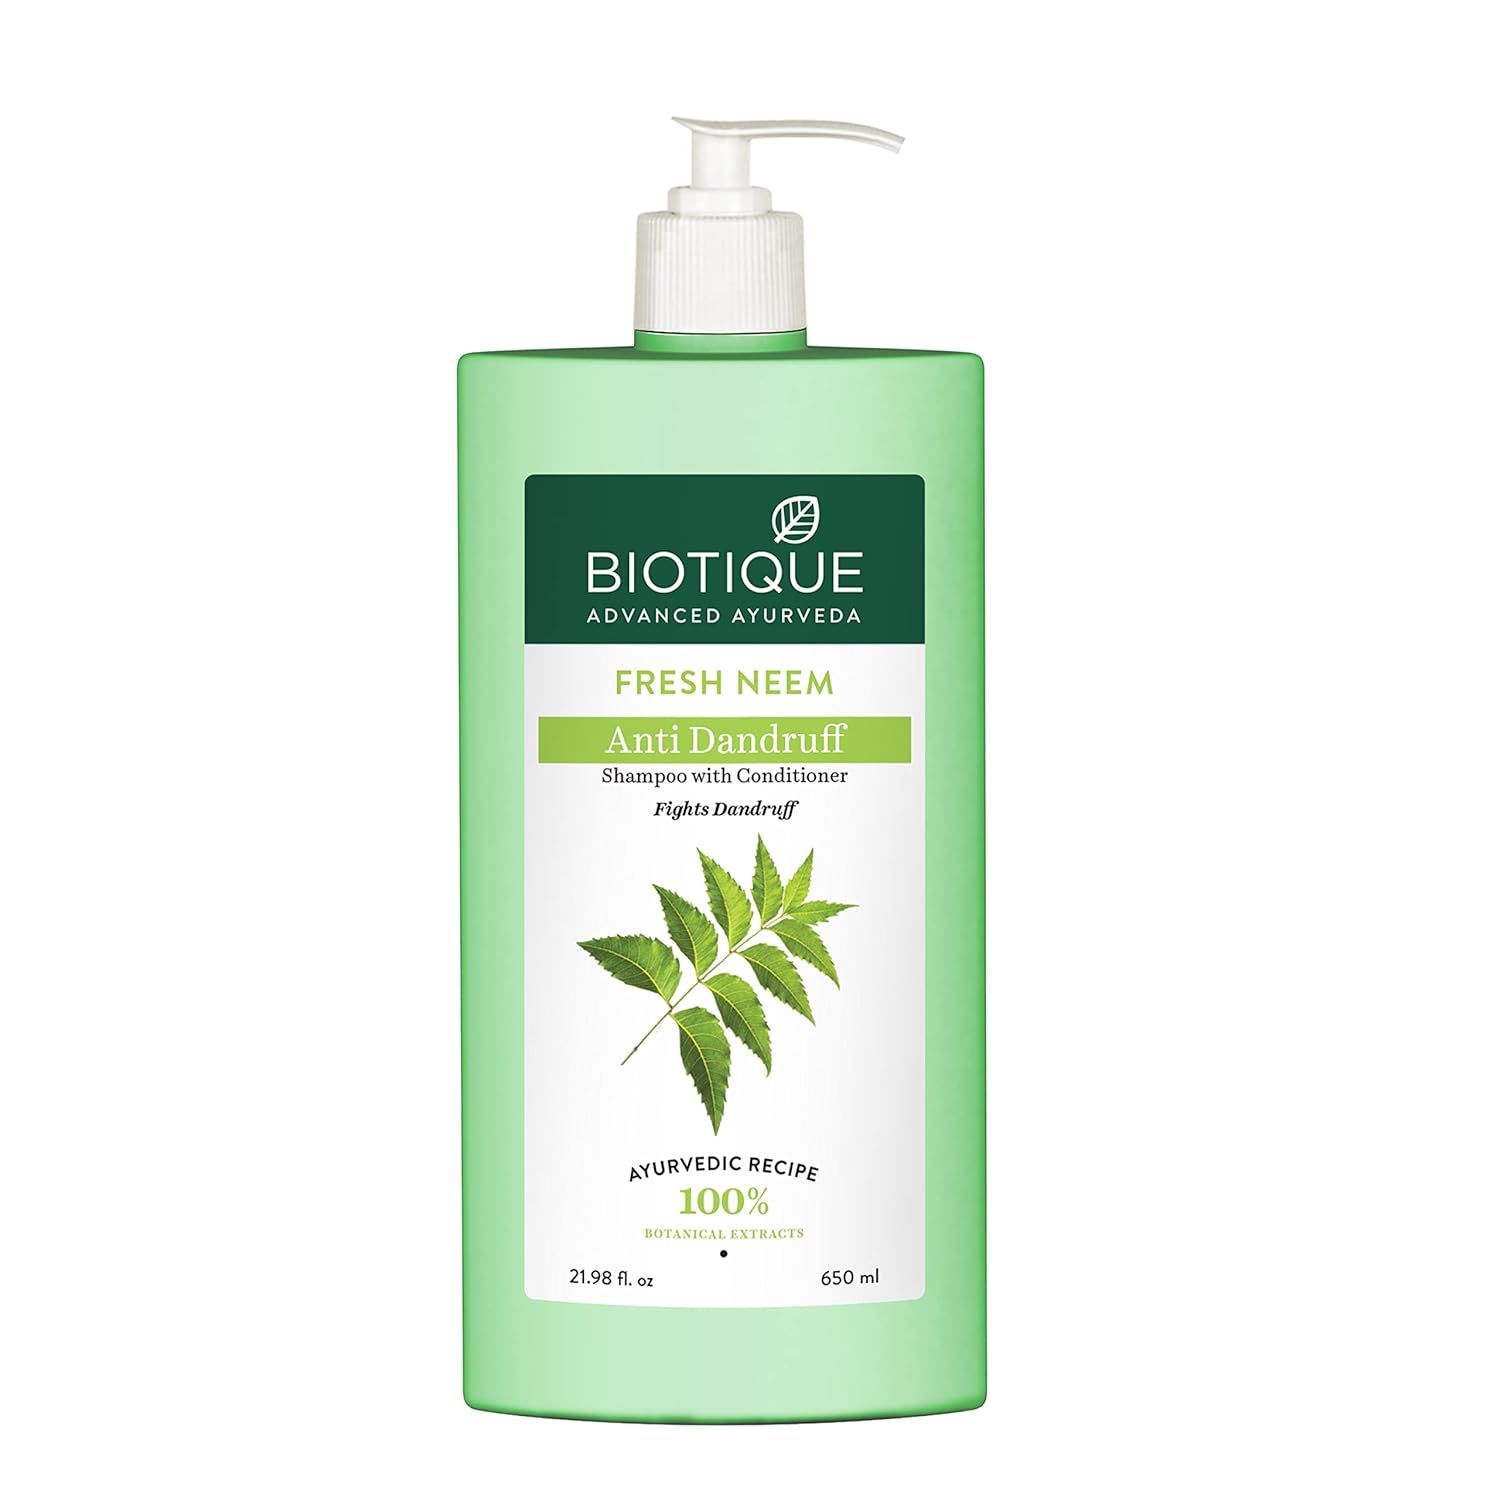 Biotique Fresh Neem Anti Dandruff Shampoo and Conditioner